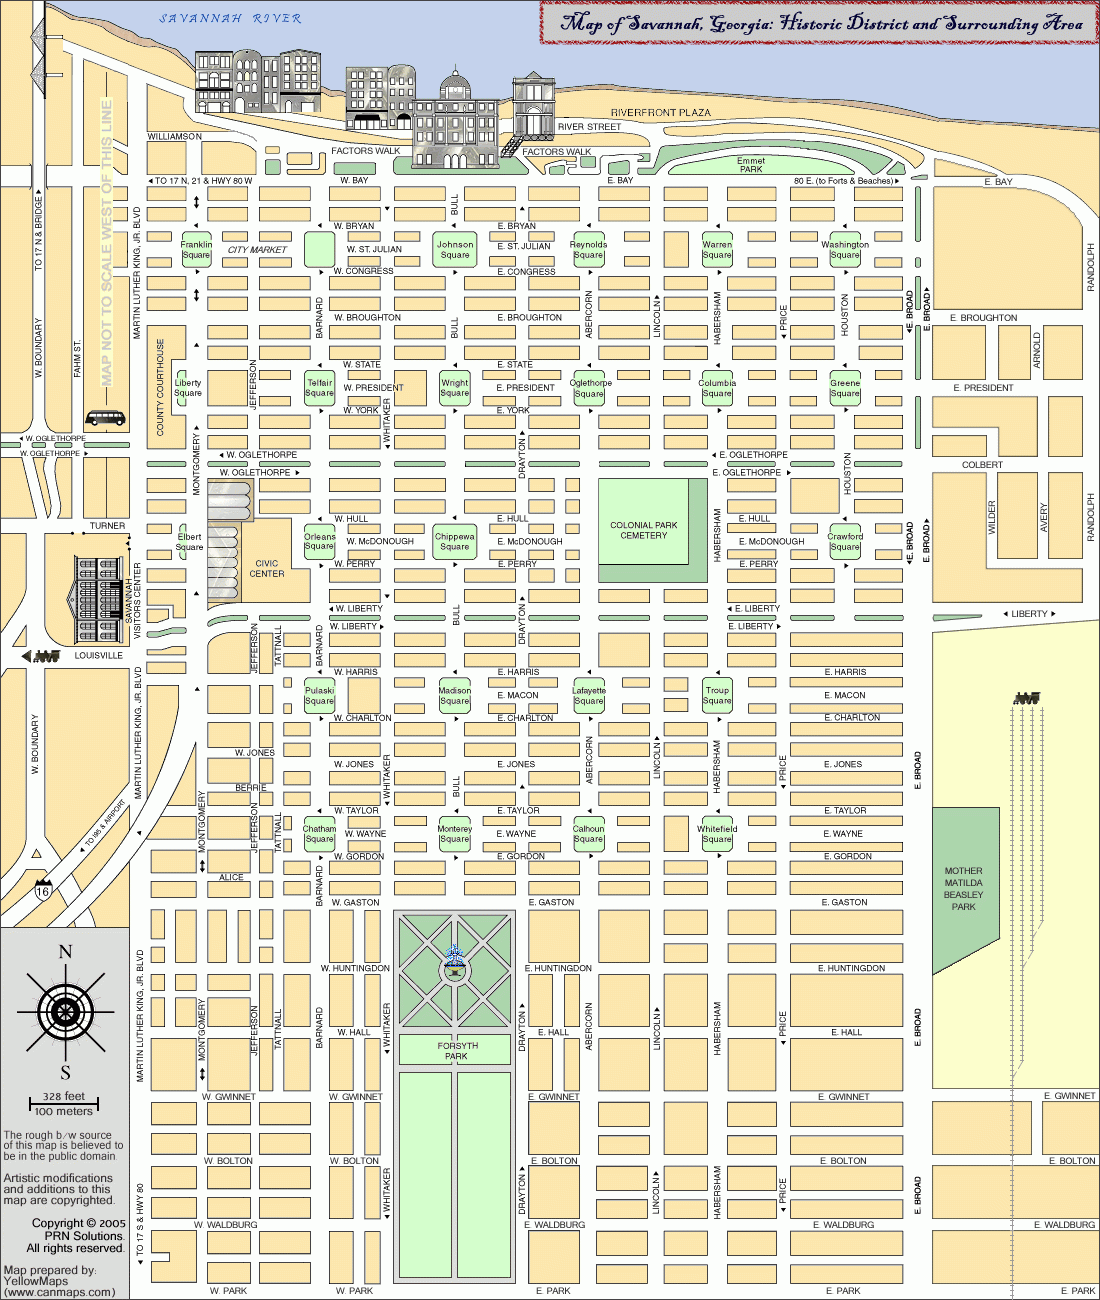 Online Map Of Savannah Historic District